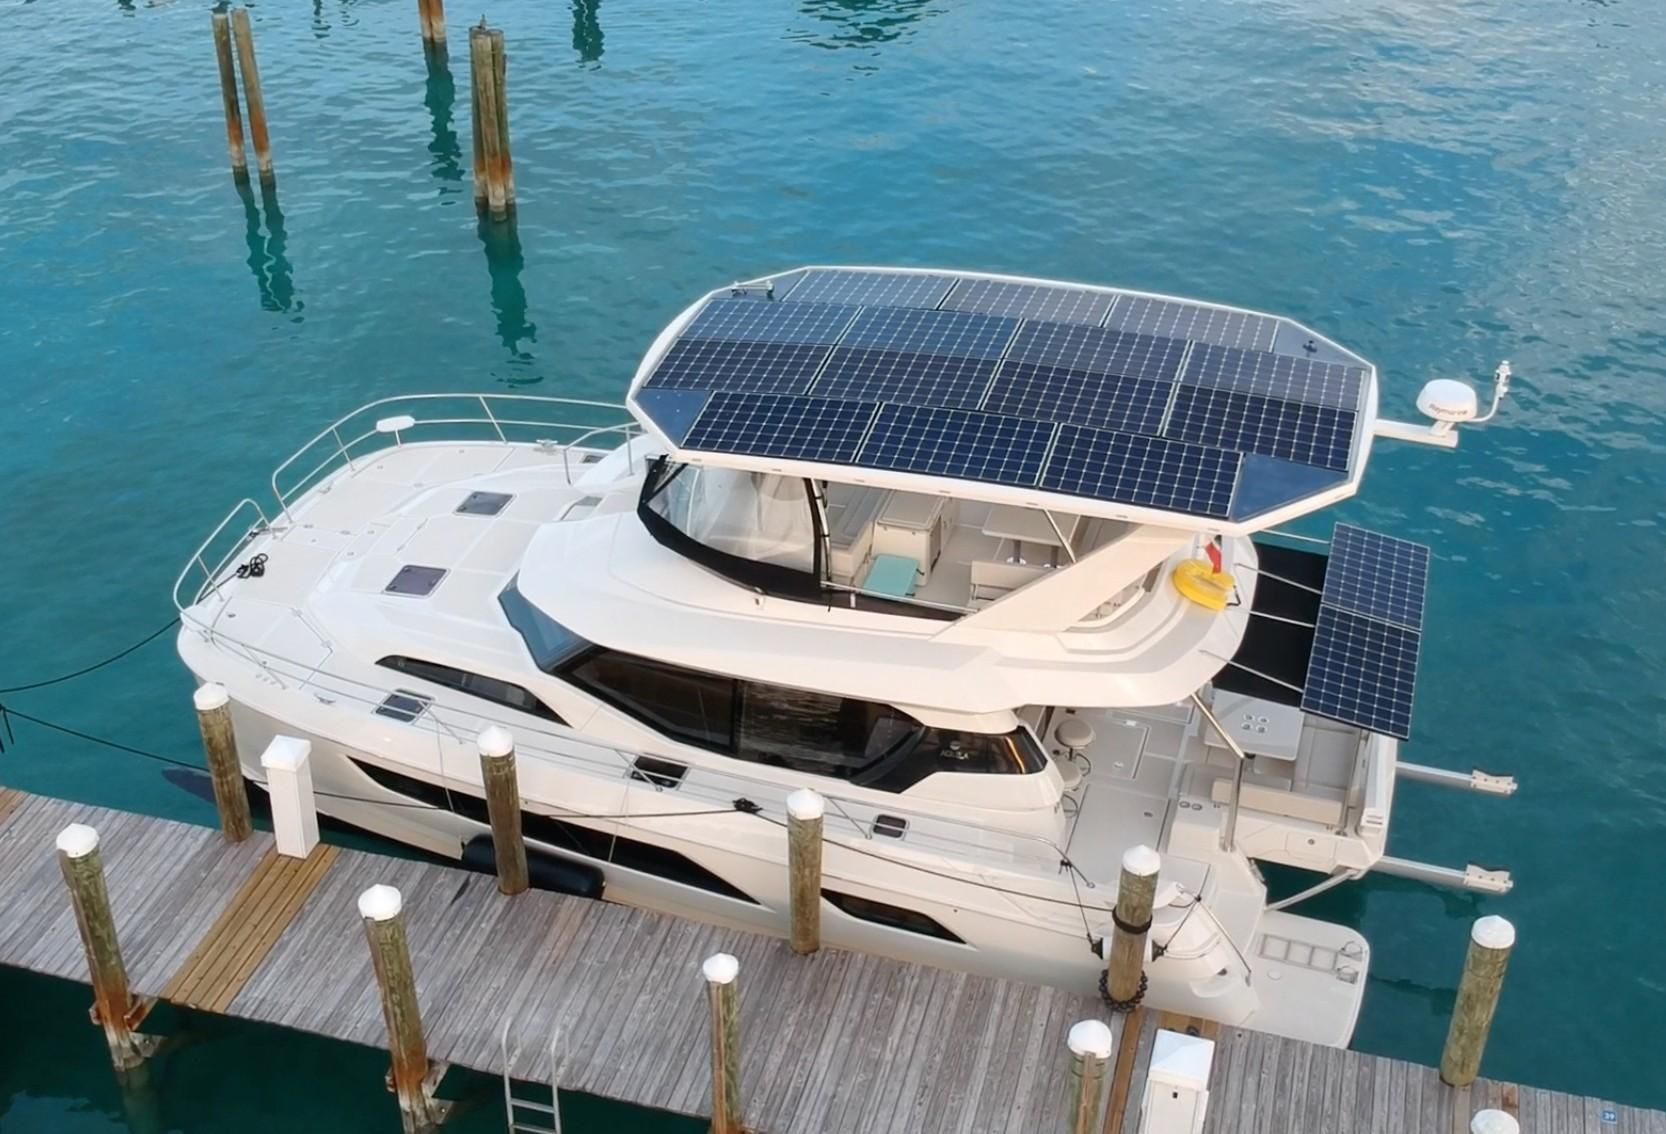 2019 Aquila 44 Power Catamaran for sale - YachtWorld